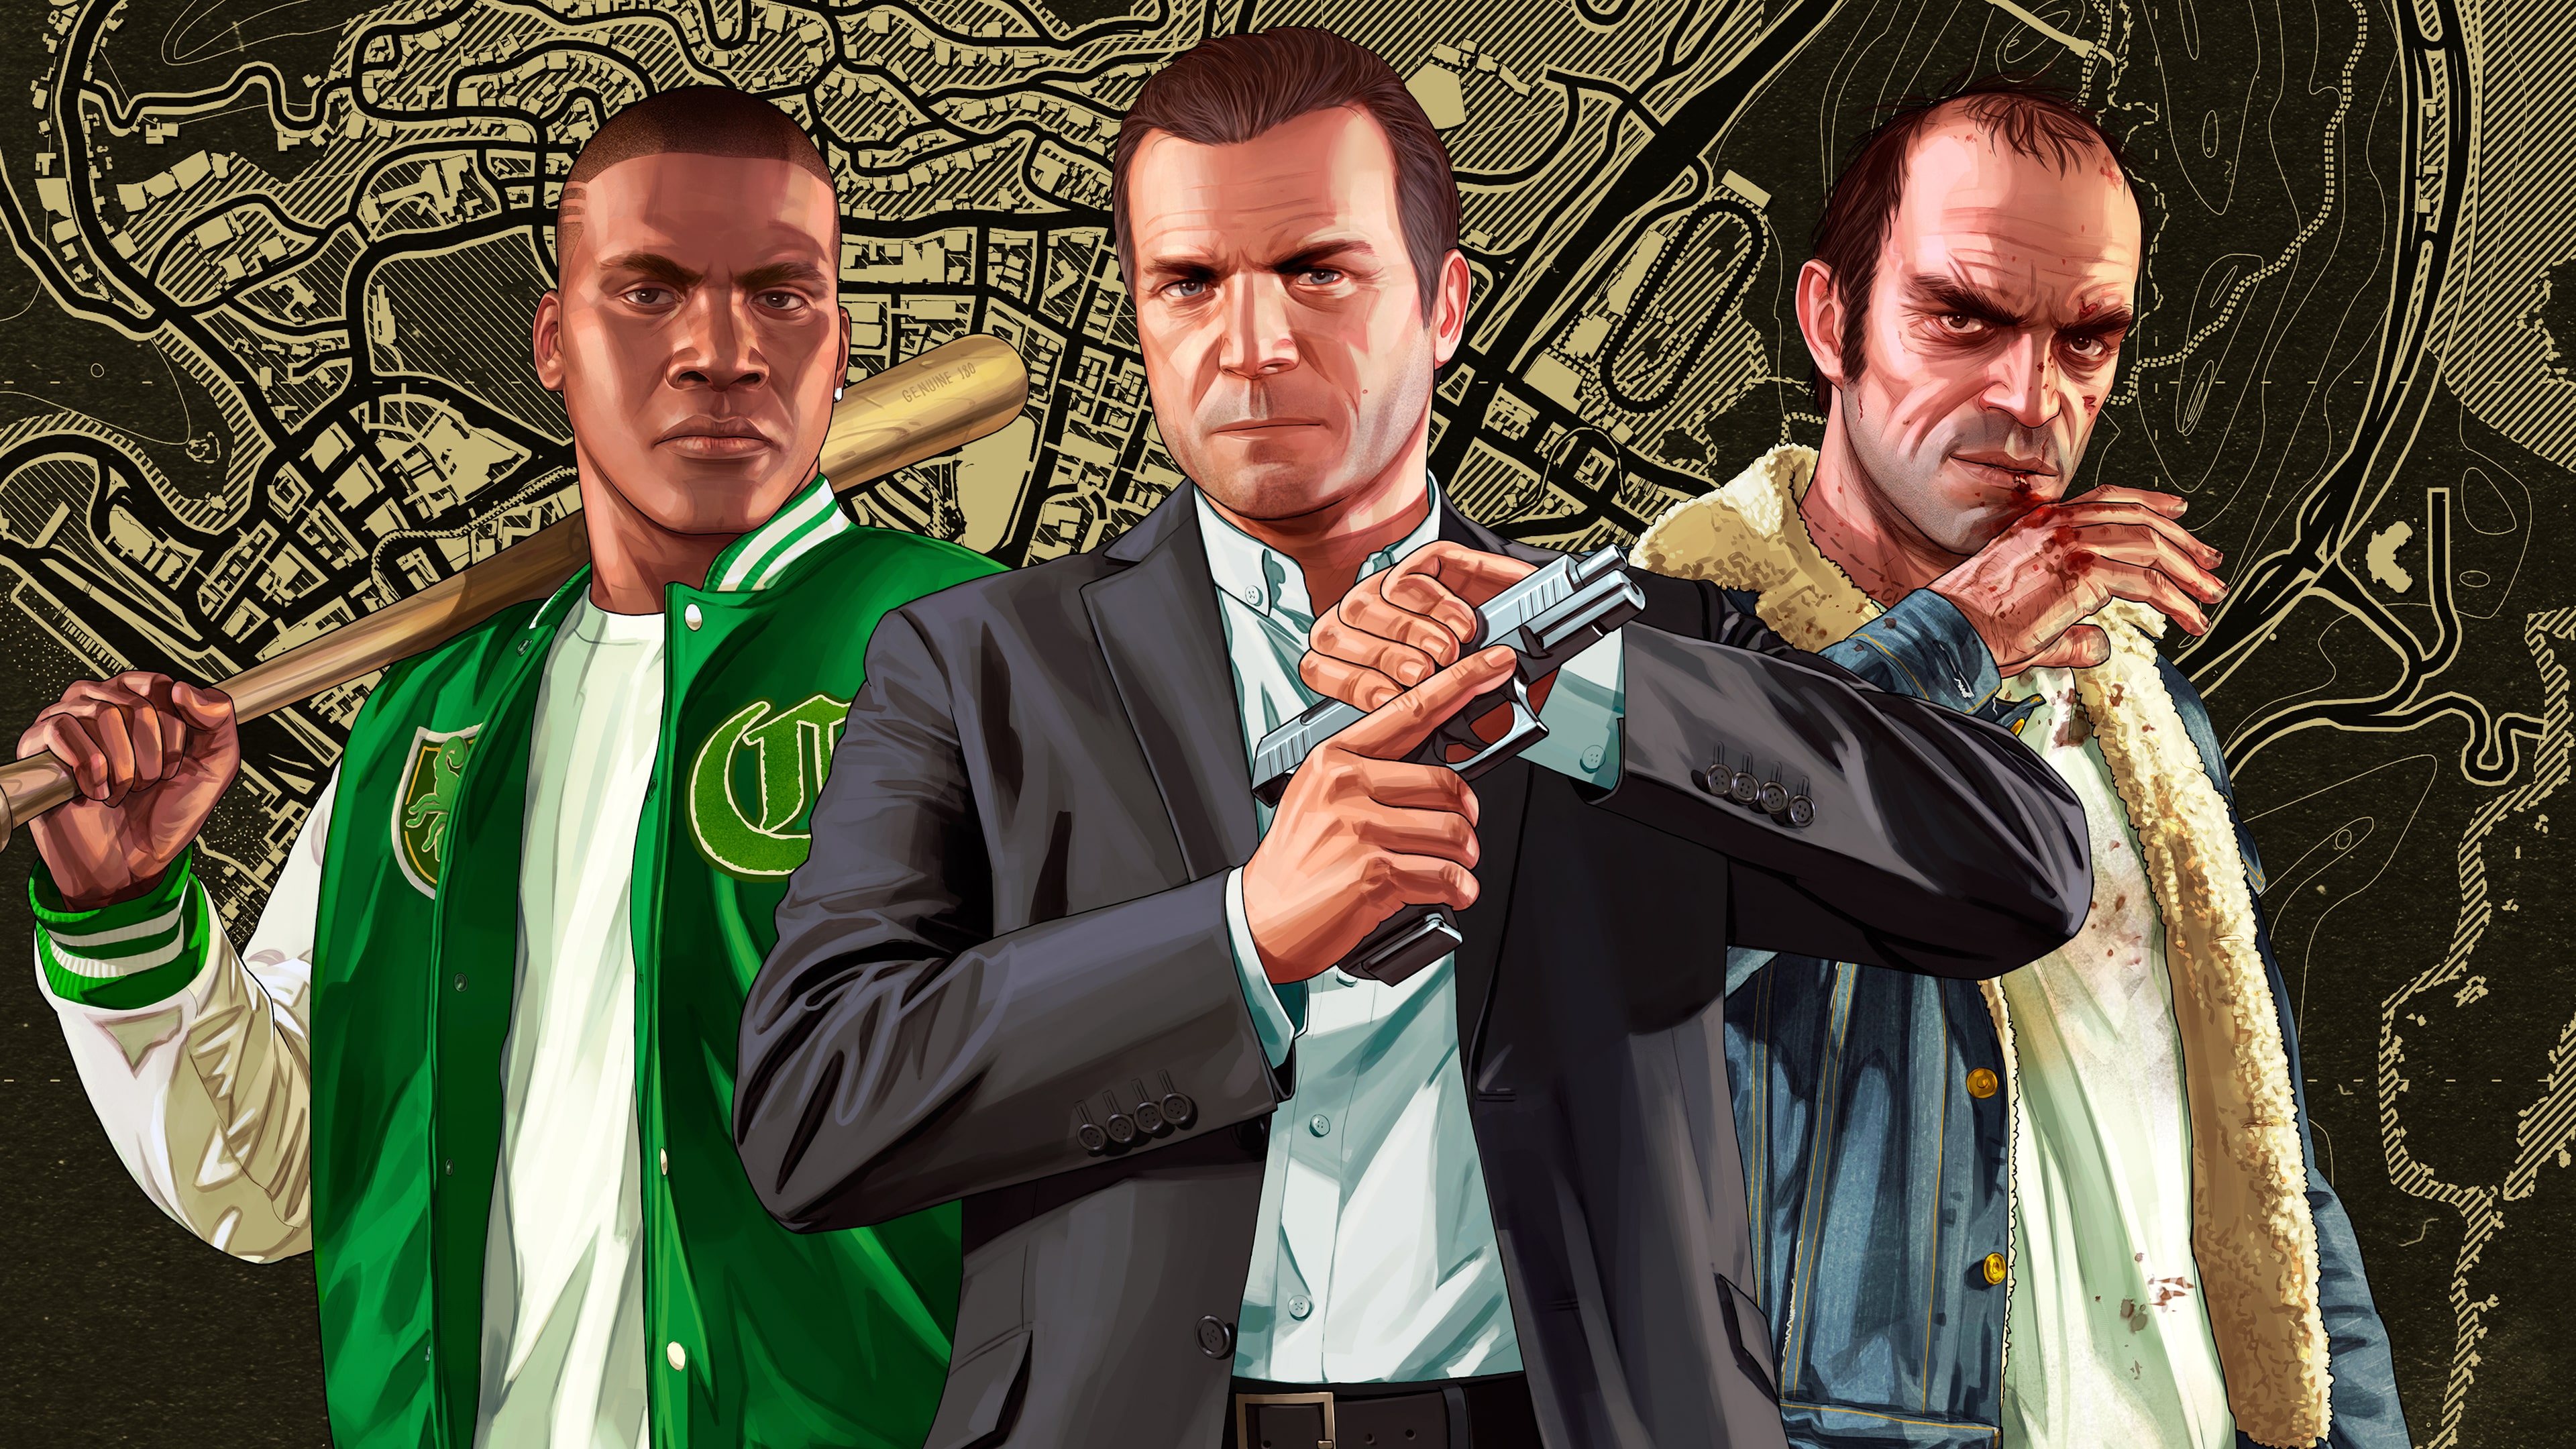 Grand Theft Auto V (PS4™ y PS5™)